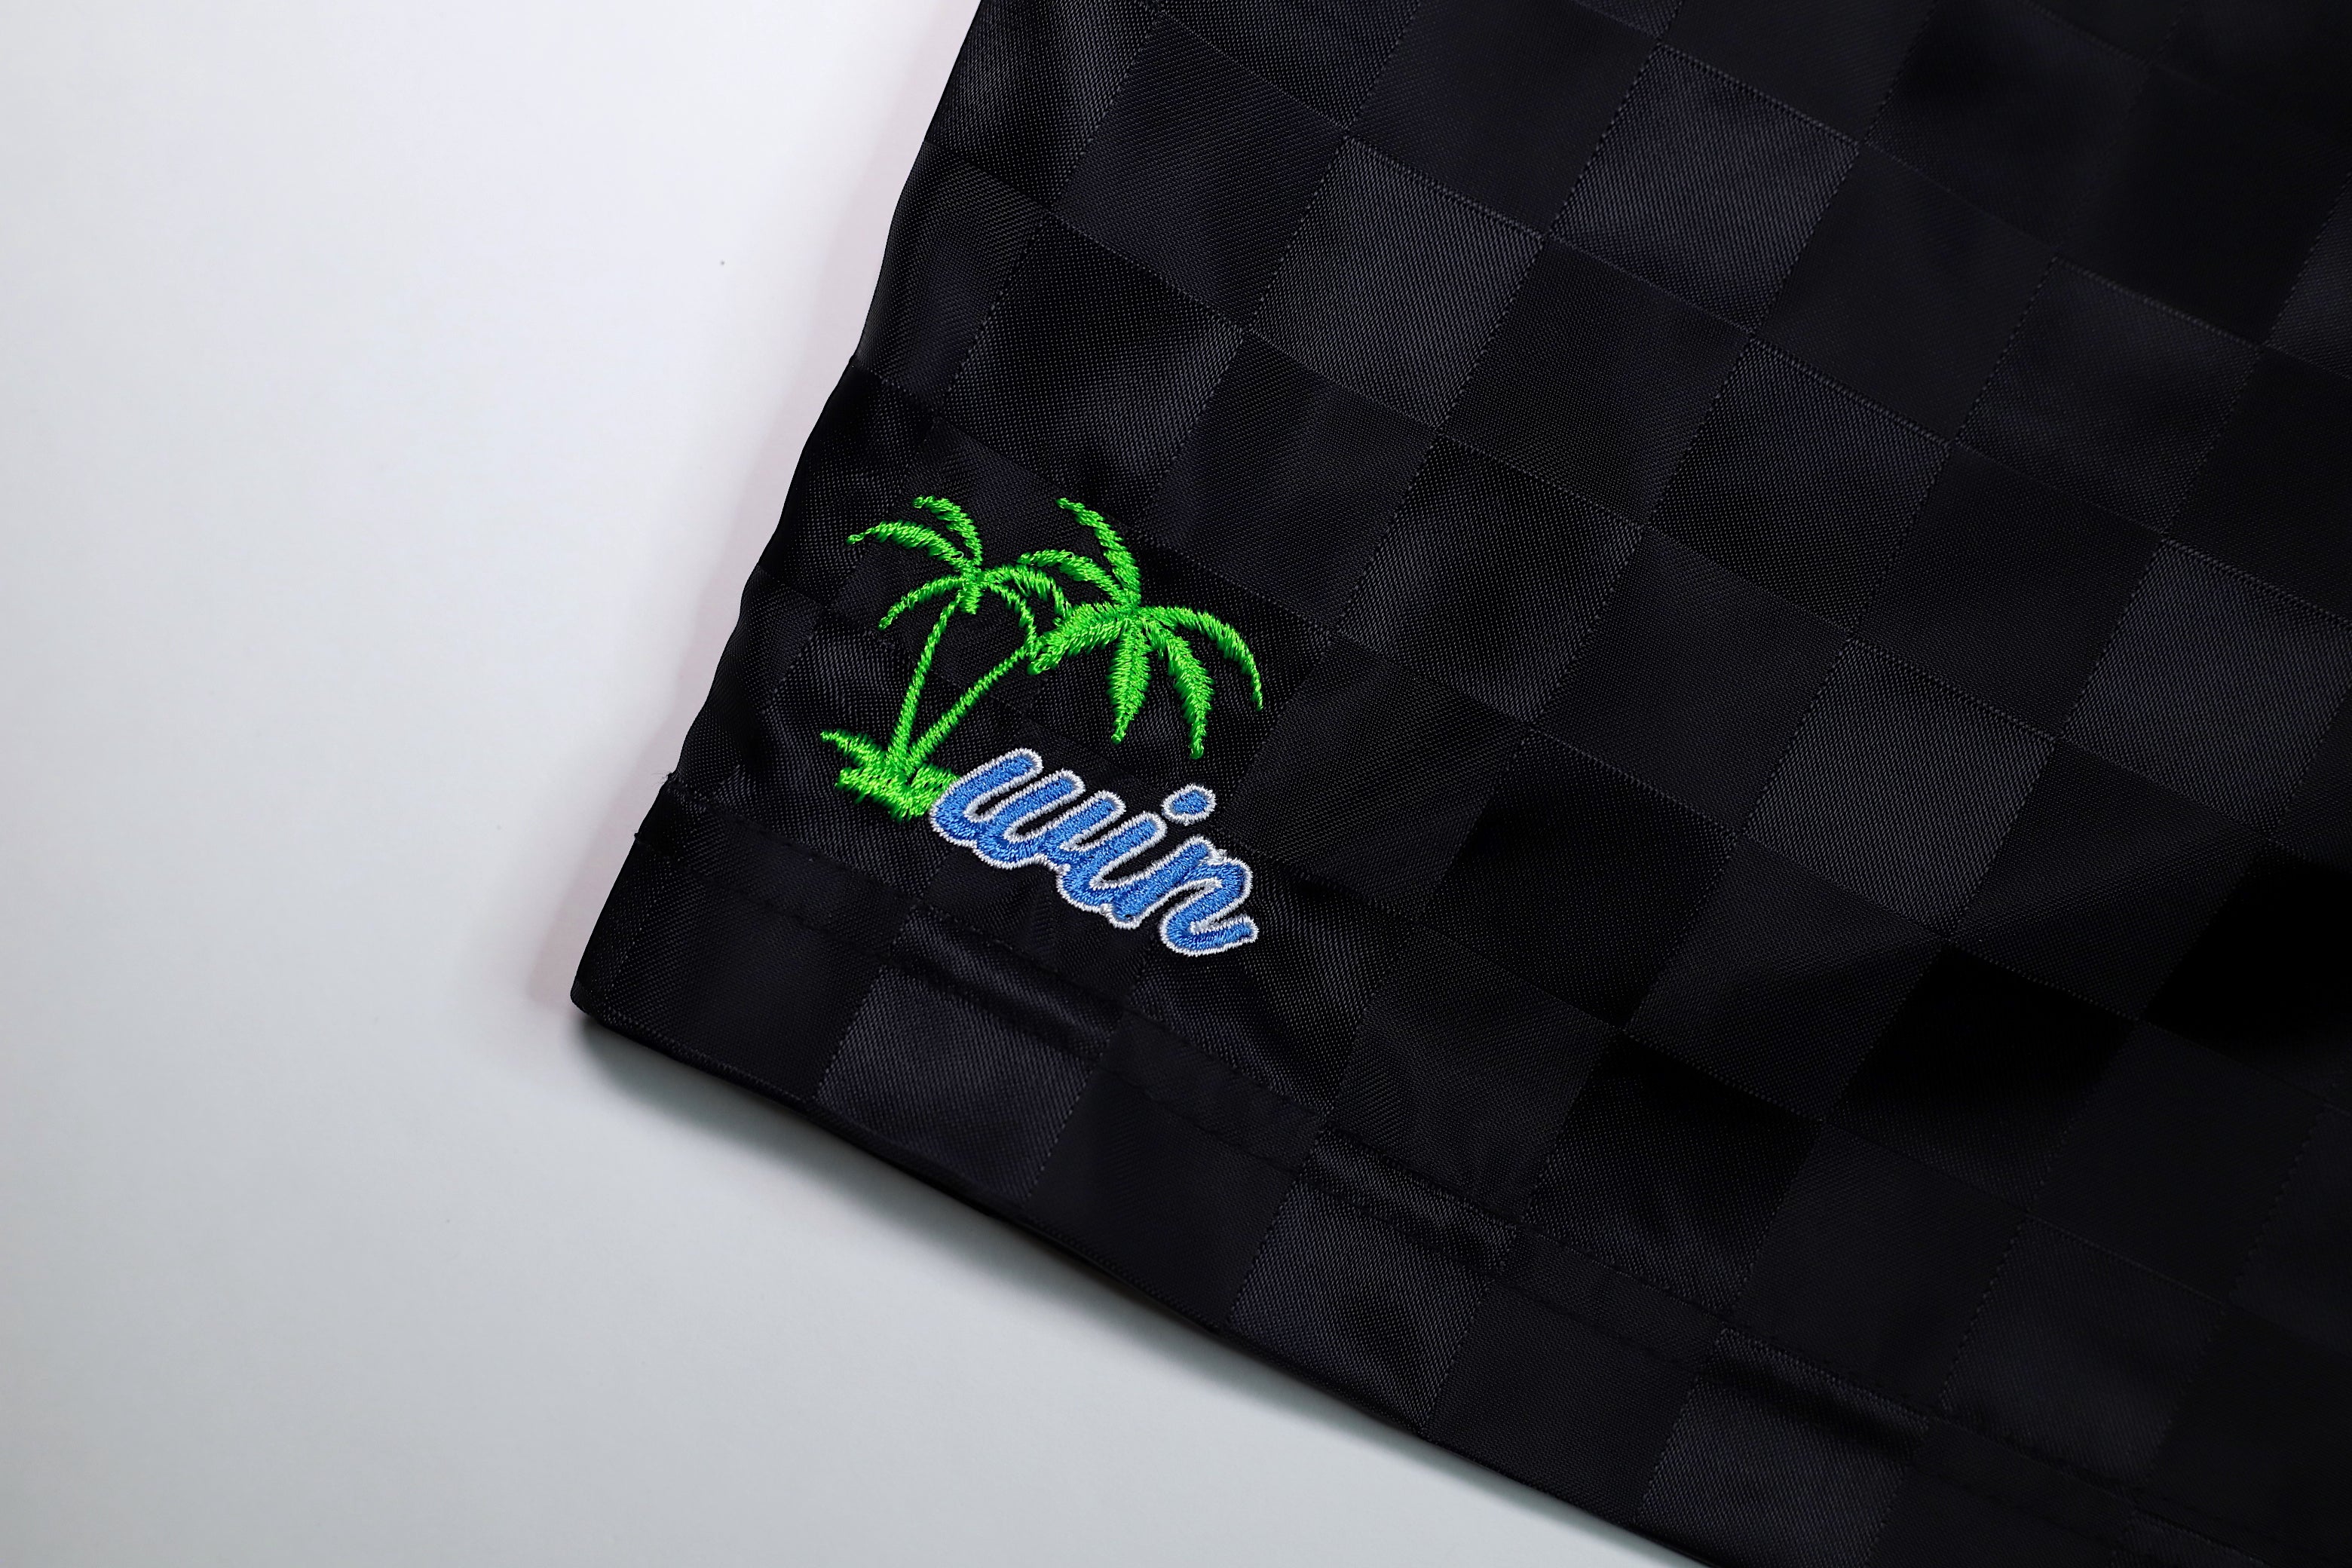 Winbros - "Palm Tree" Checkerboard Umbro Shorts - Black/Sky Blue